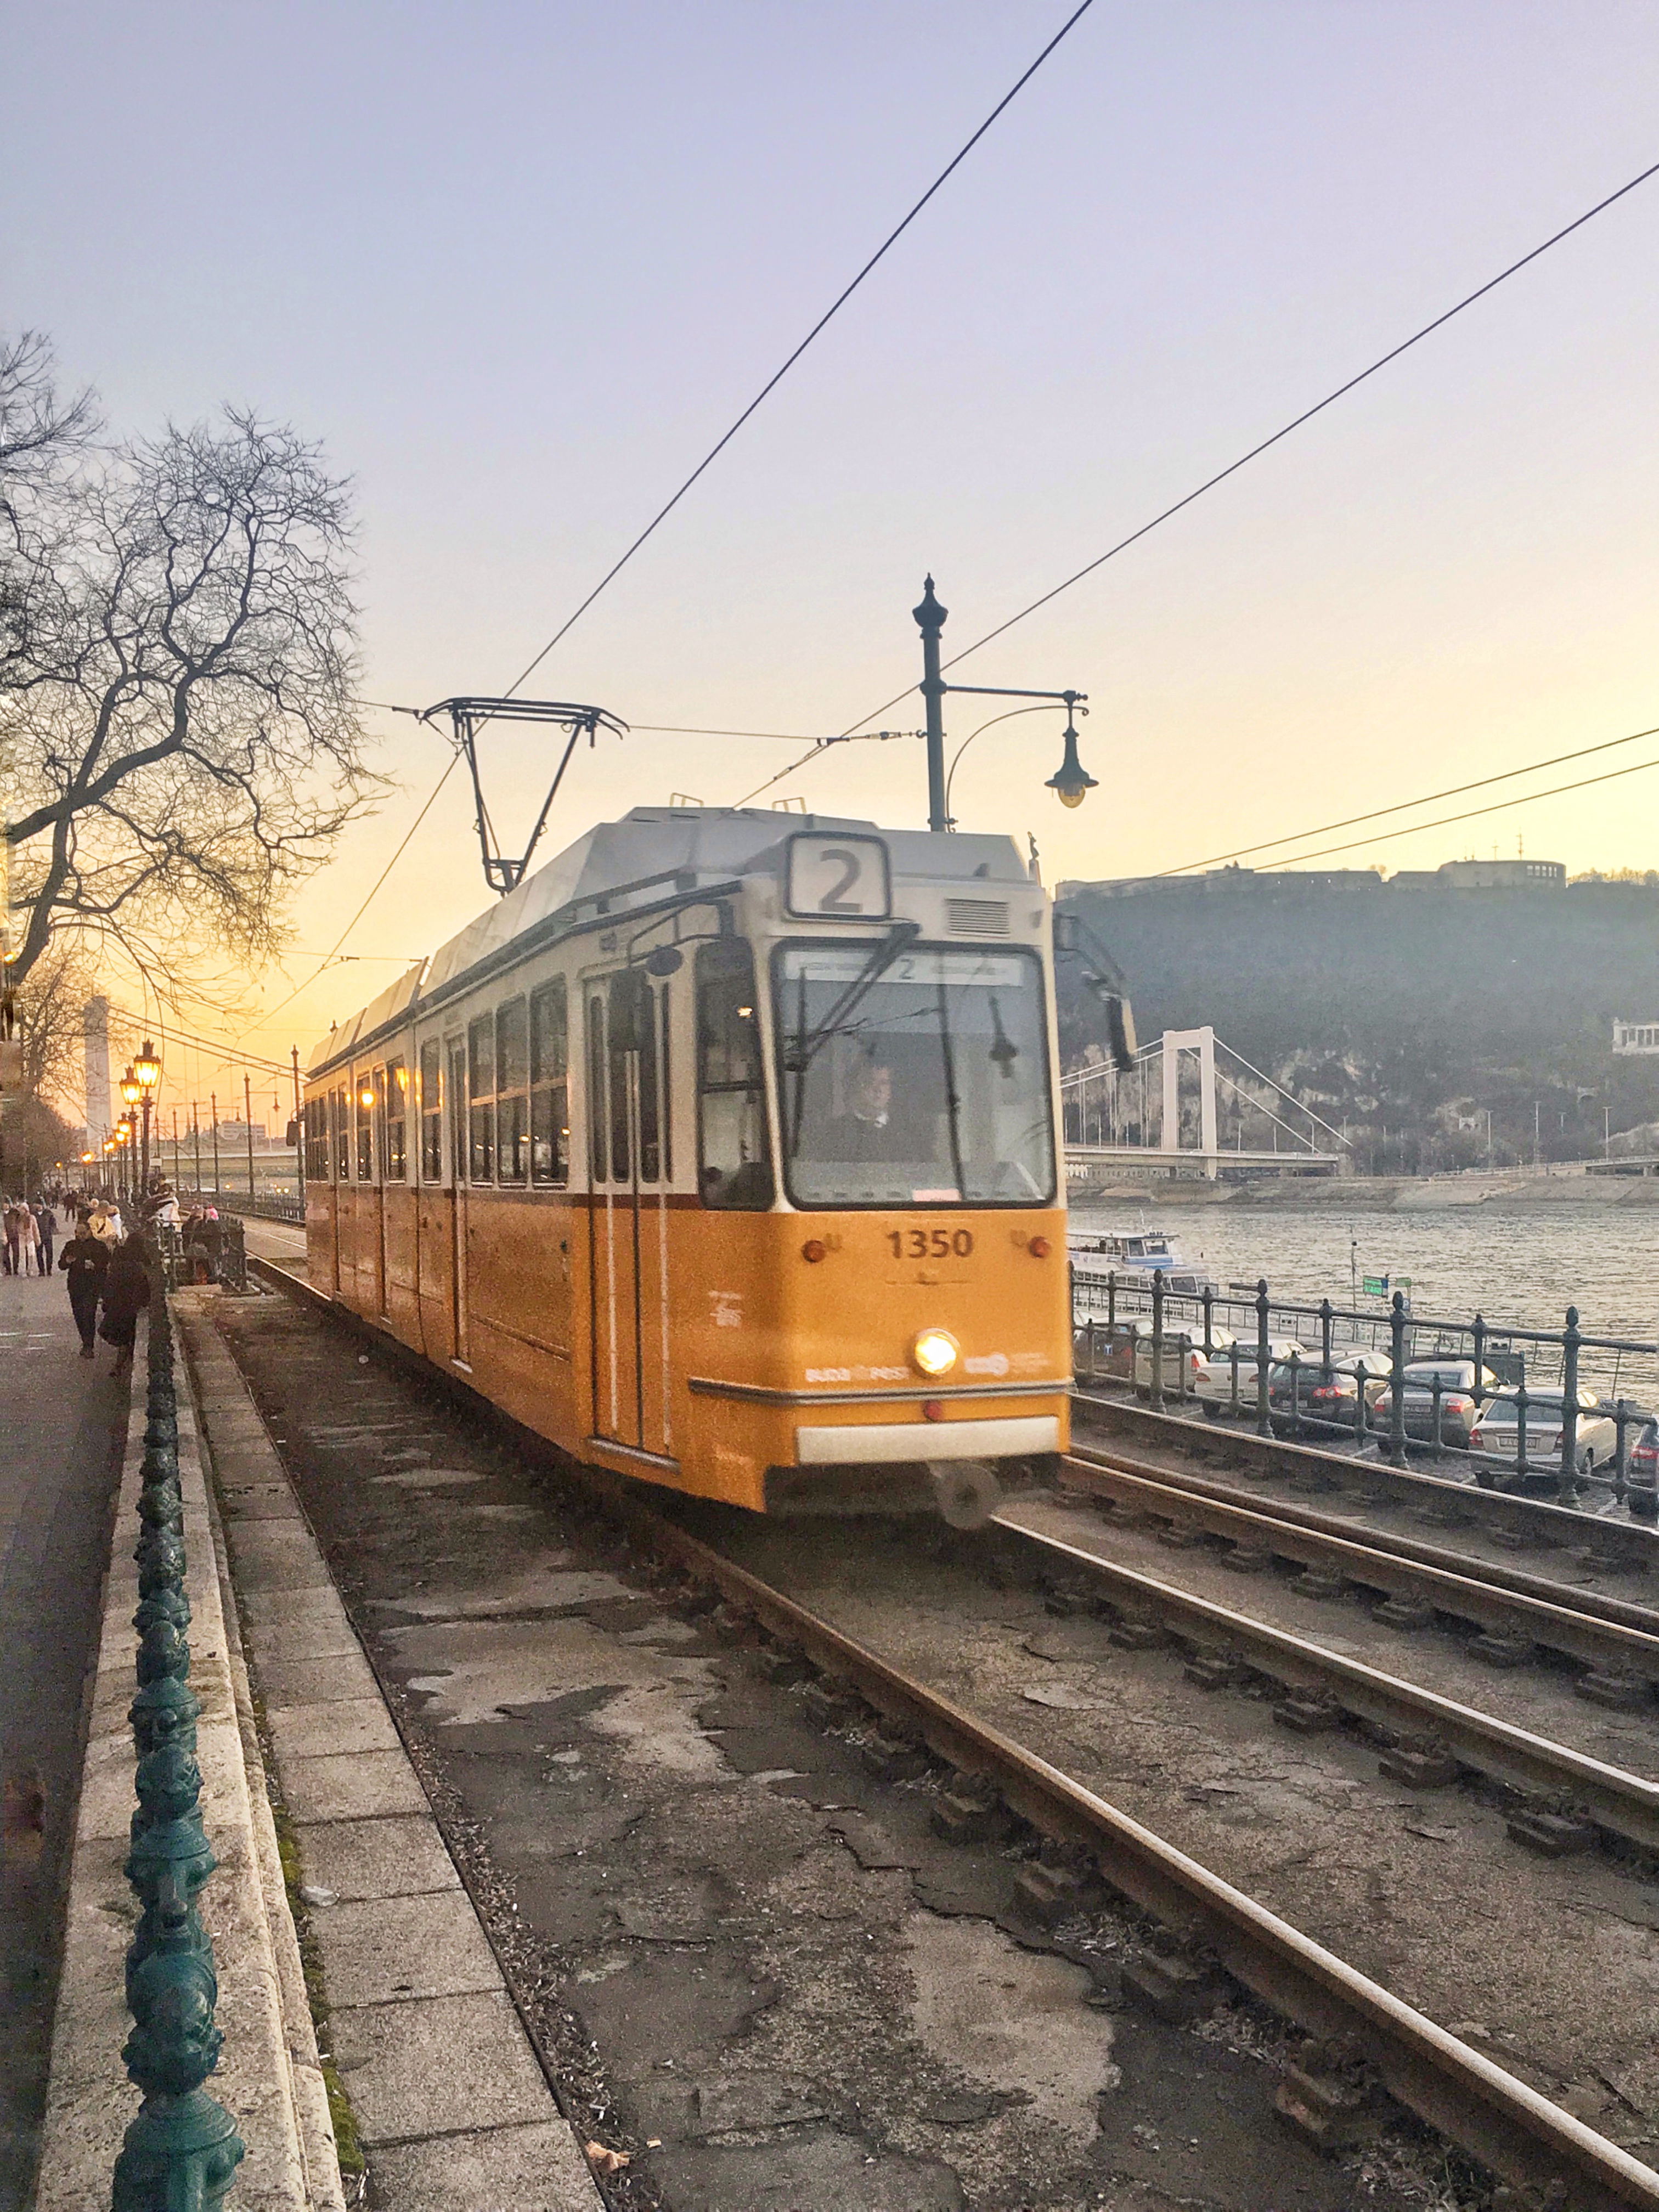 No. 2 Tram Budapest Danube Promenade